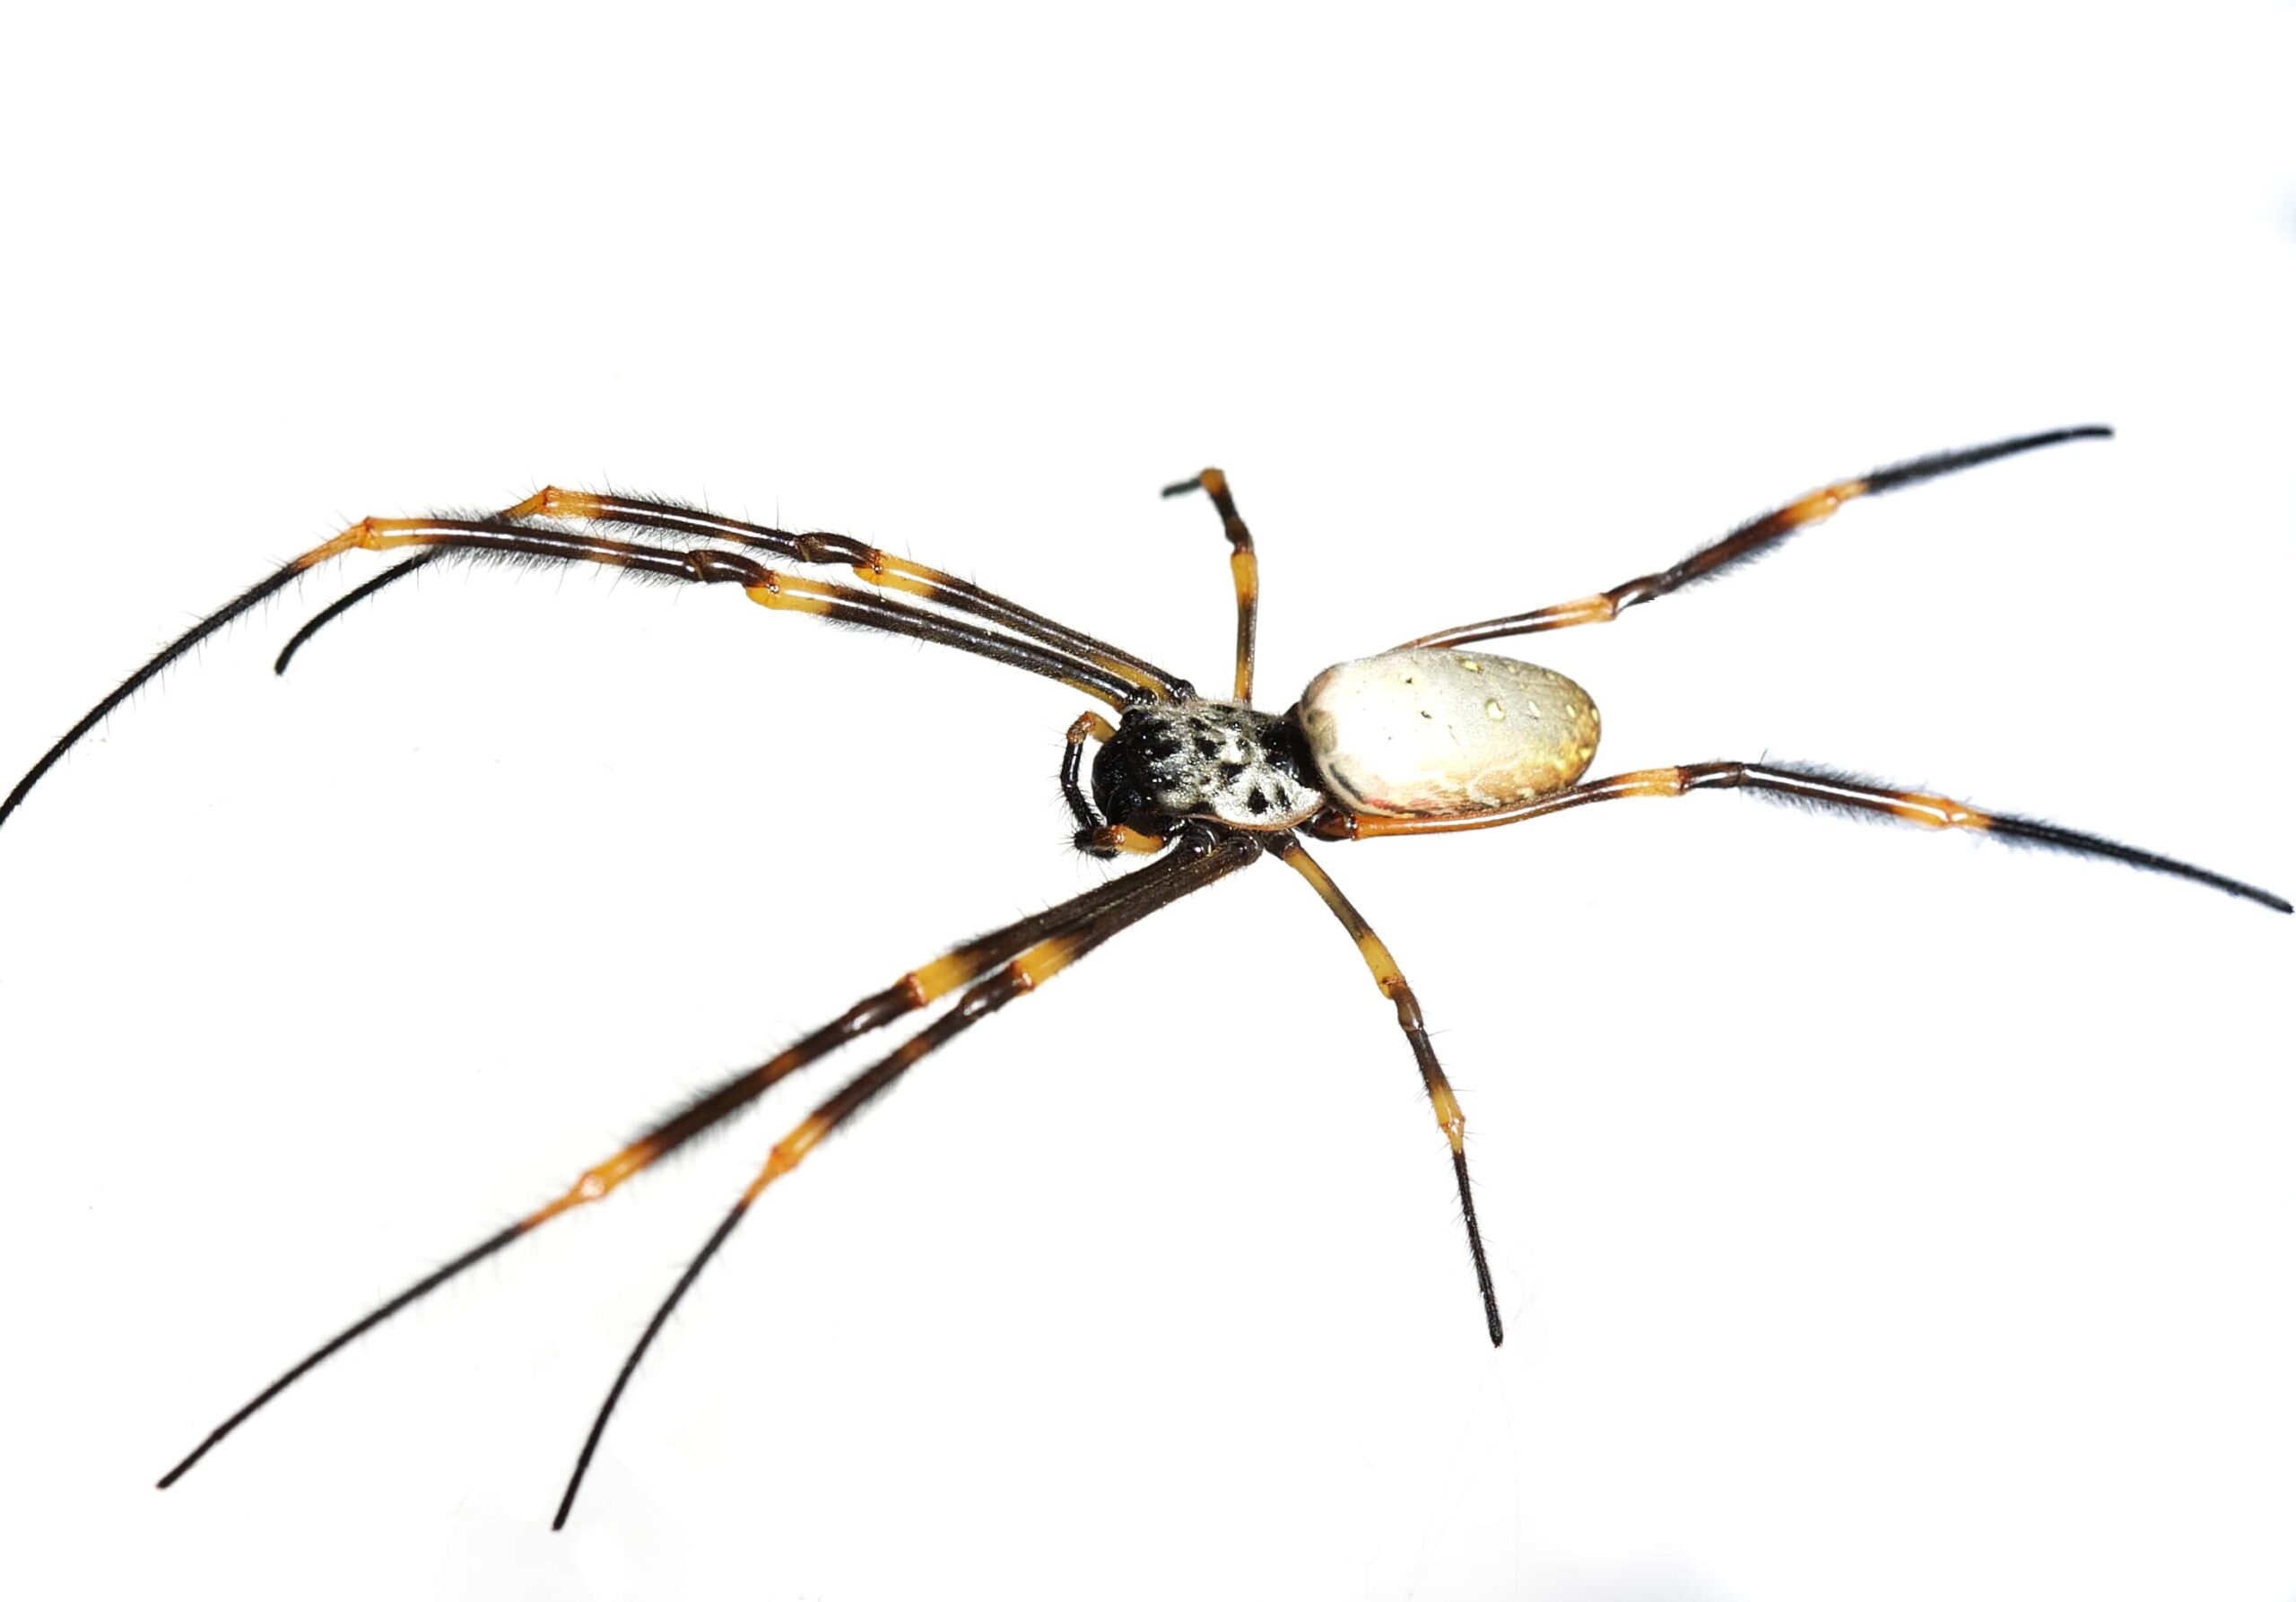 Nature curiosity: How do spiders make silk?